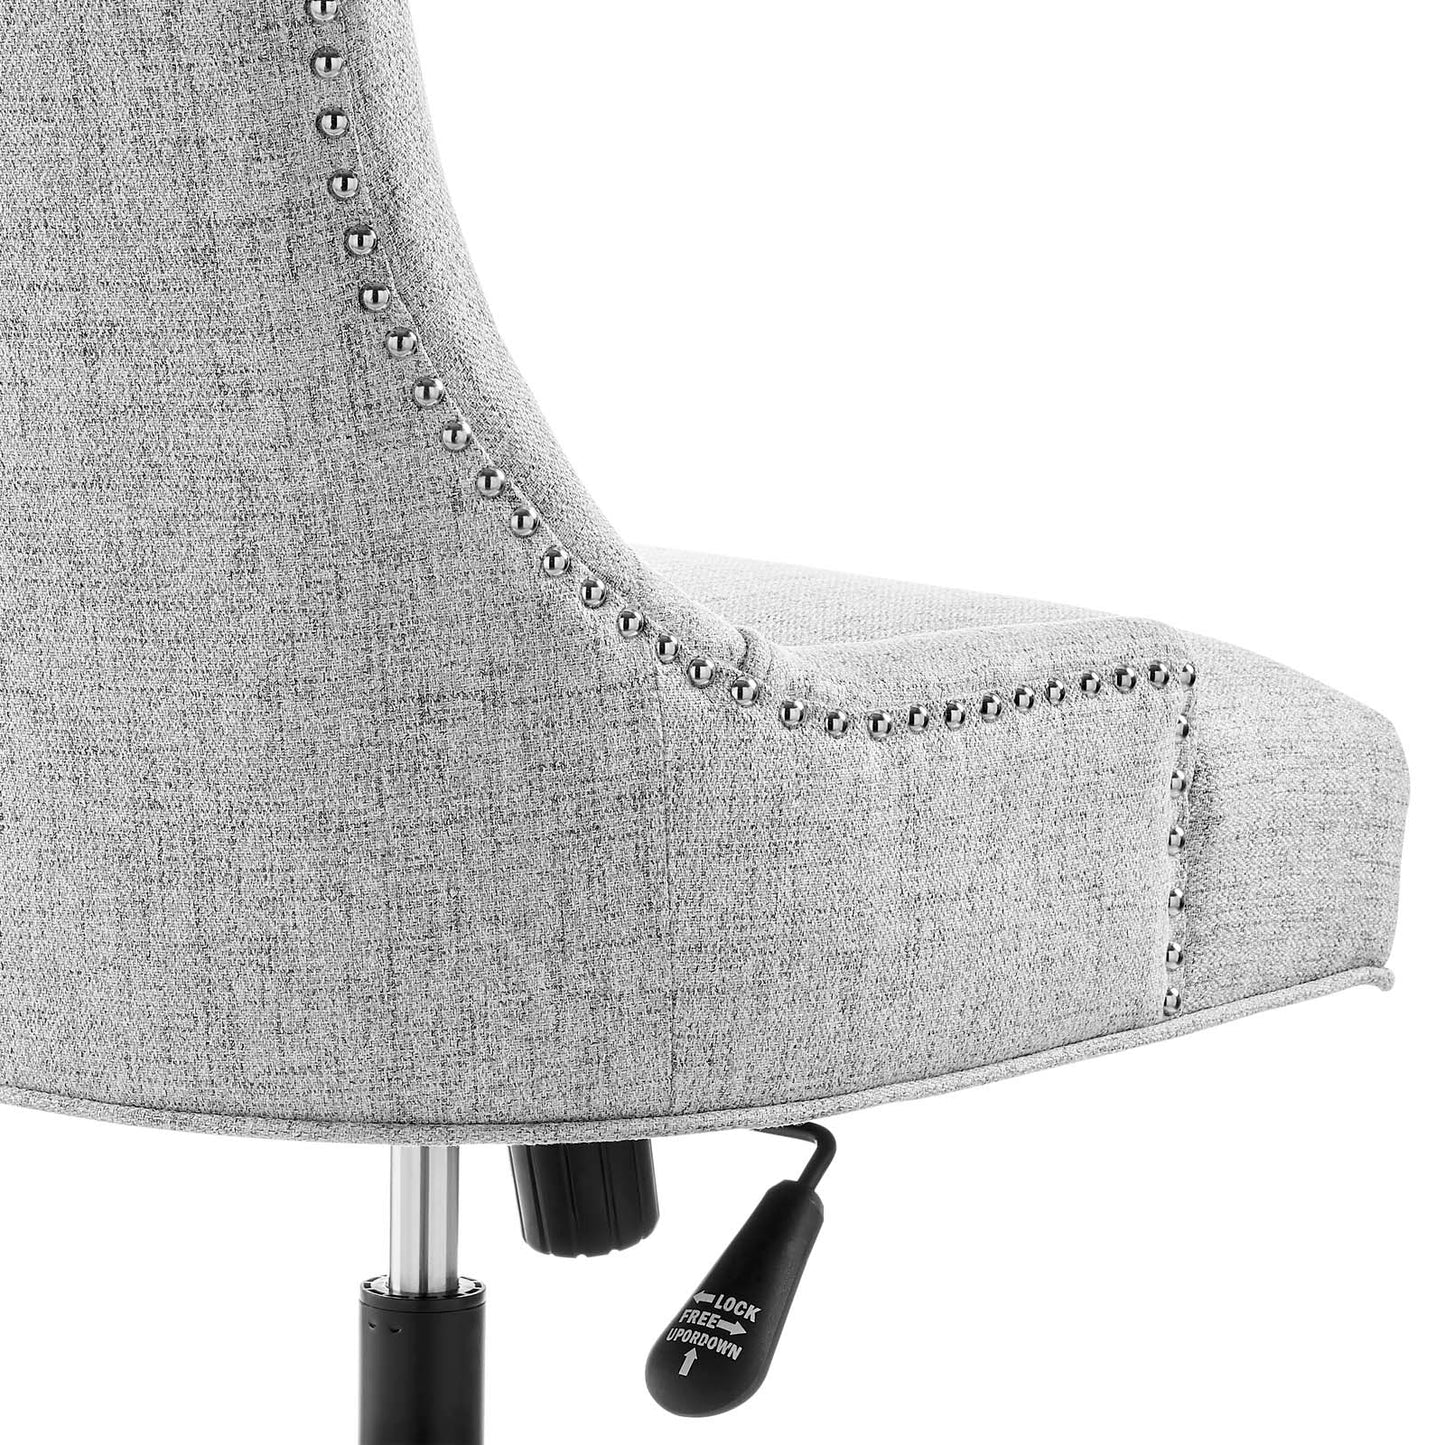 Regent Tufted Fabric Office Chair Black Light Gray EEI-4572-BLK-LGR